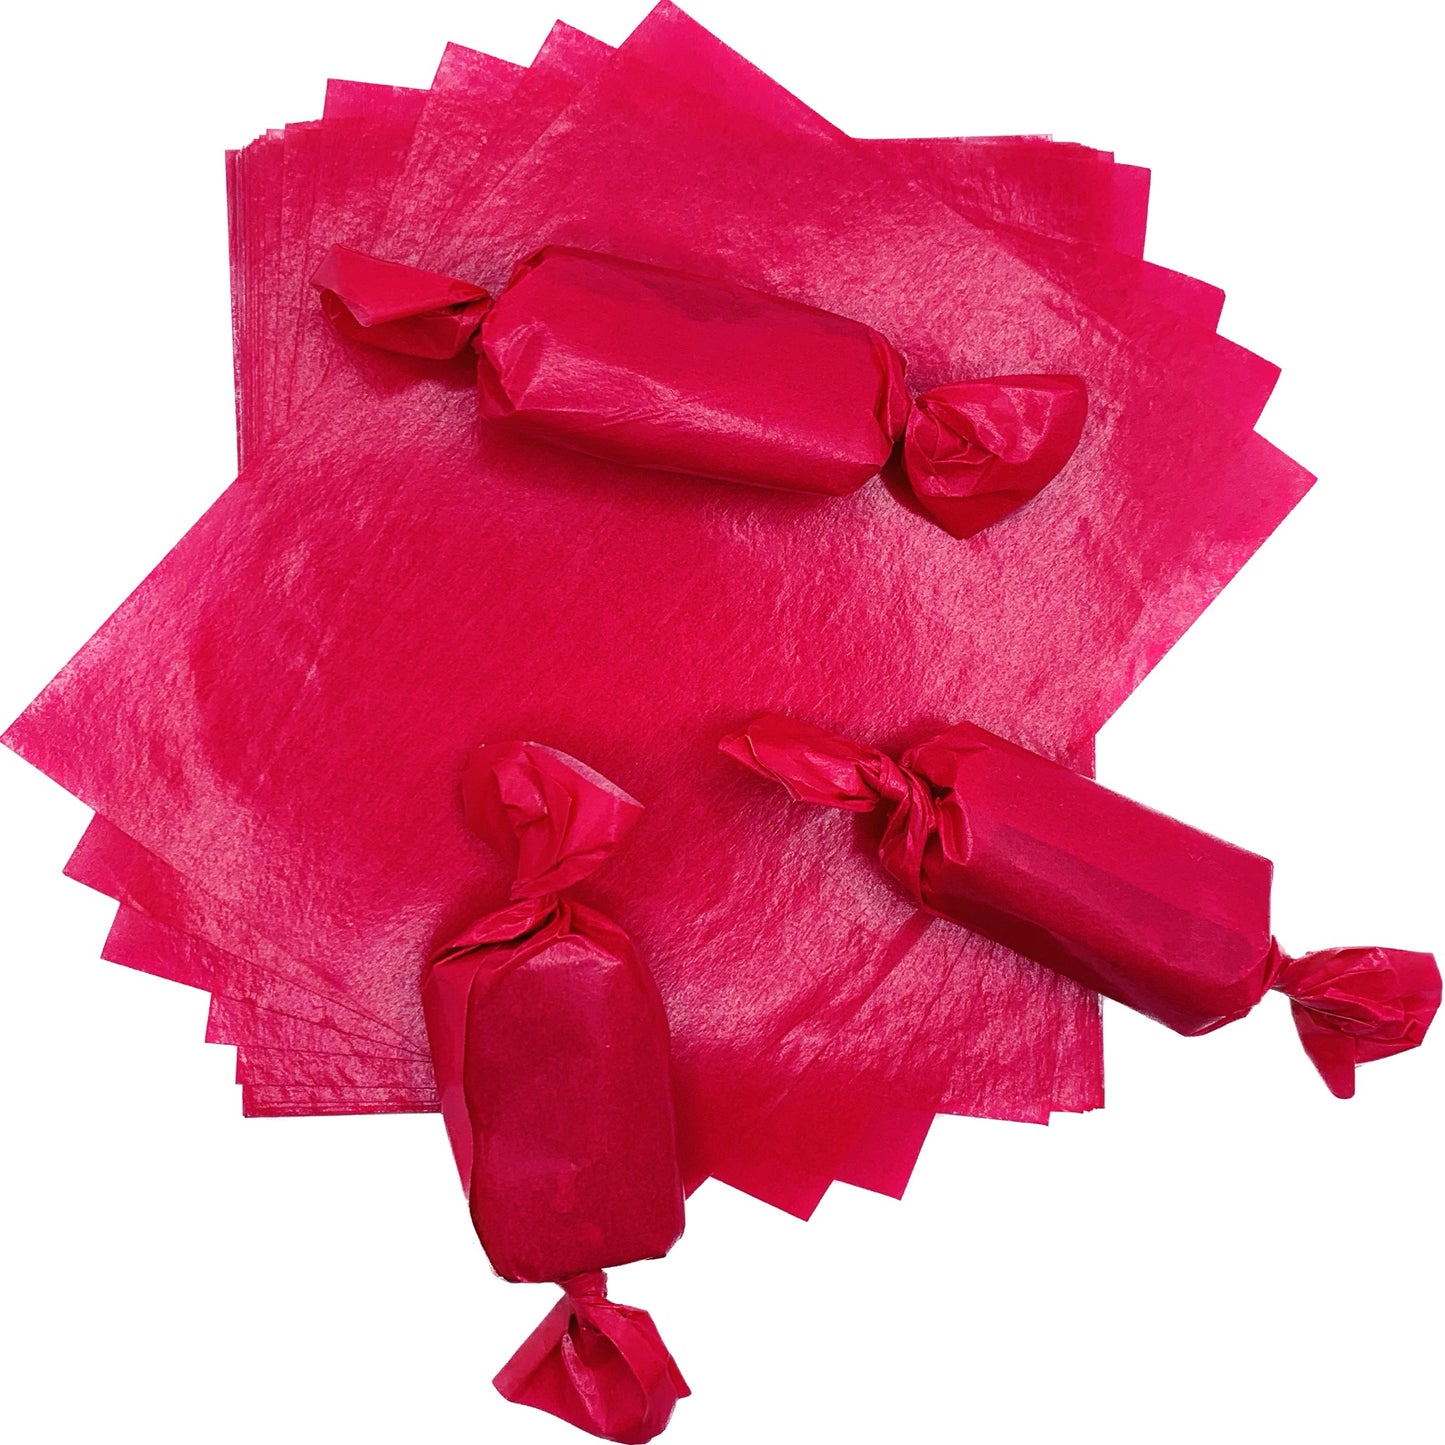 Wax Caramel/Taffy Wrappers - Pink 4 x 5